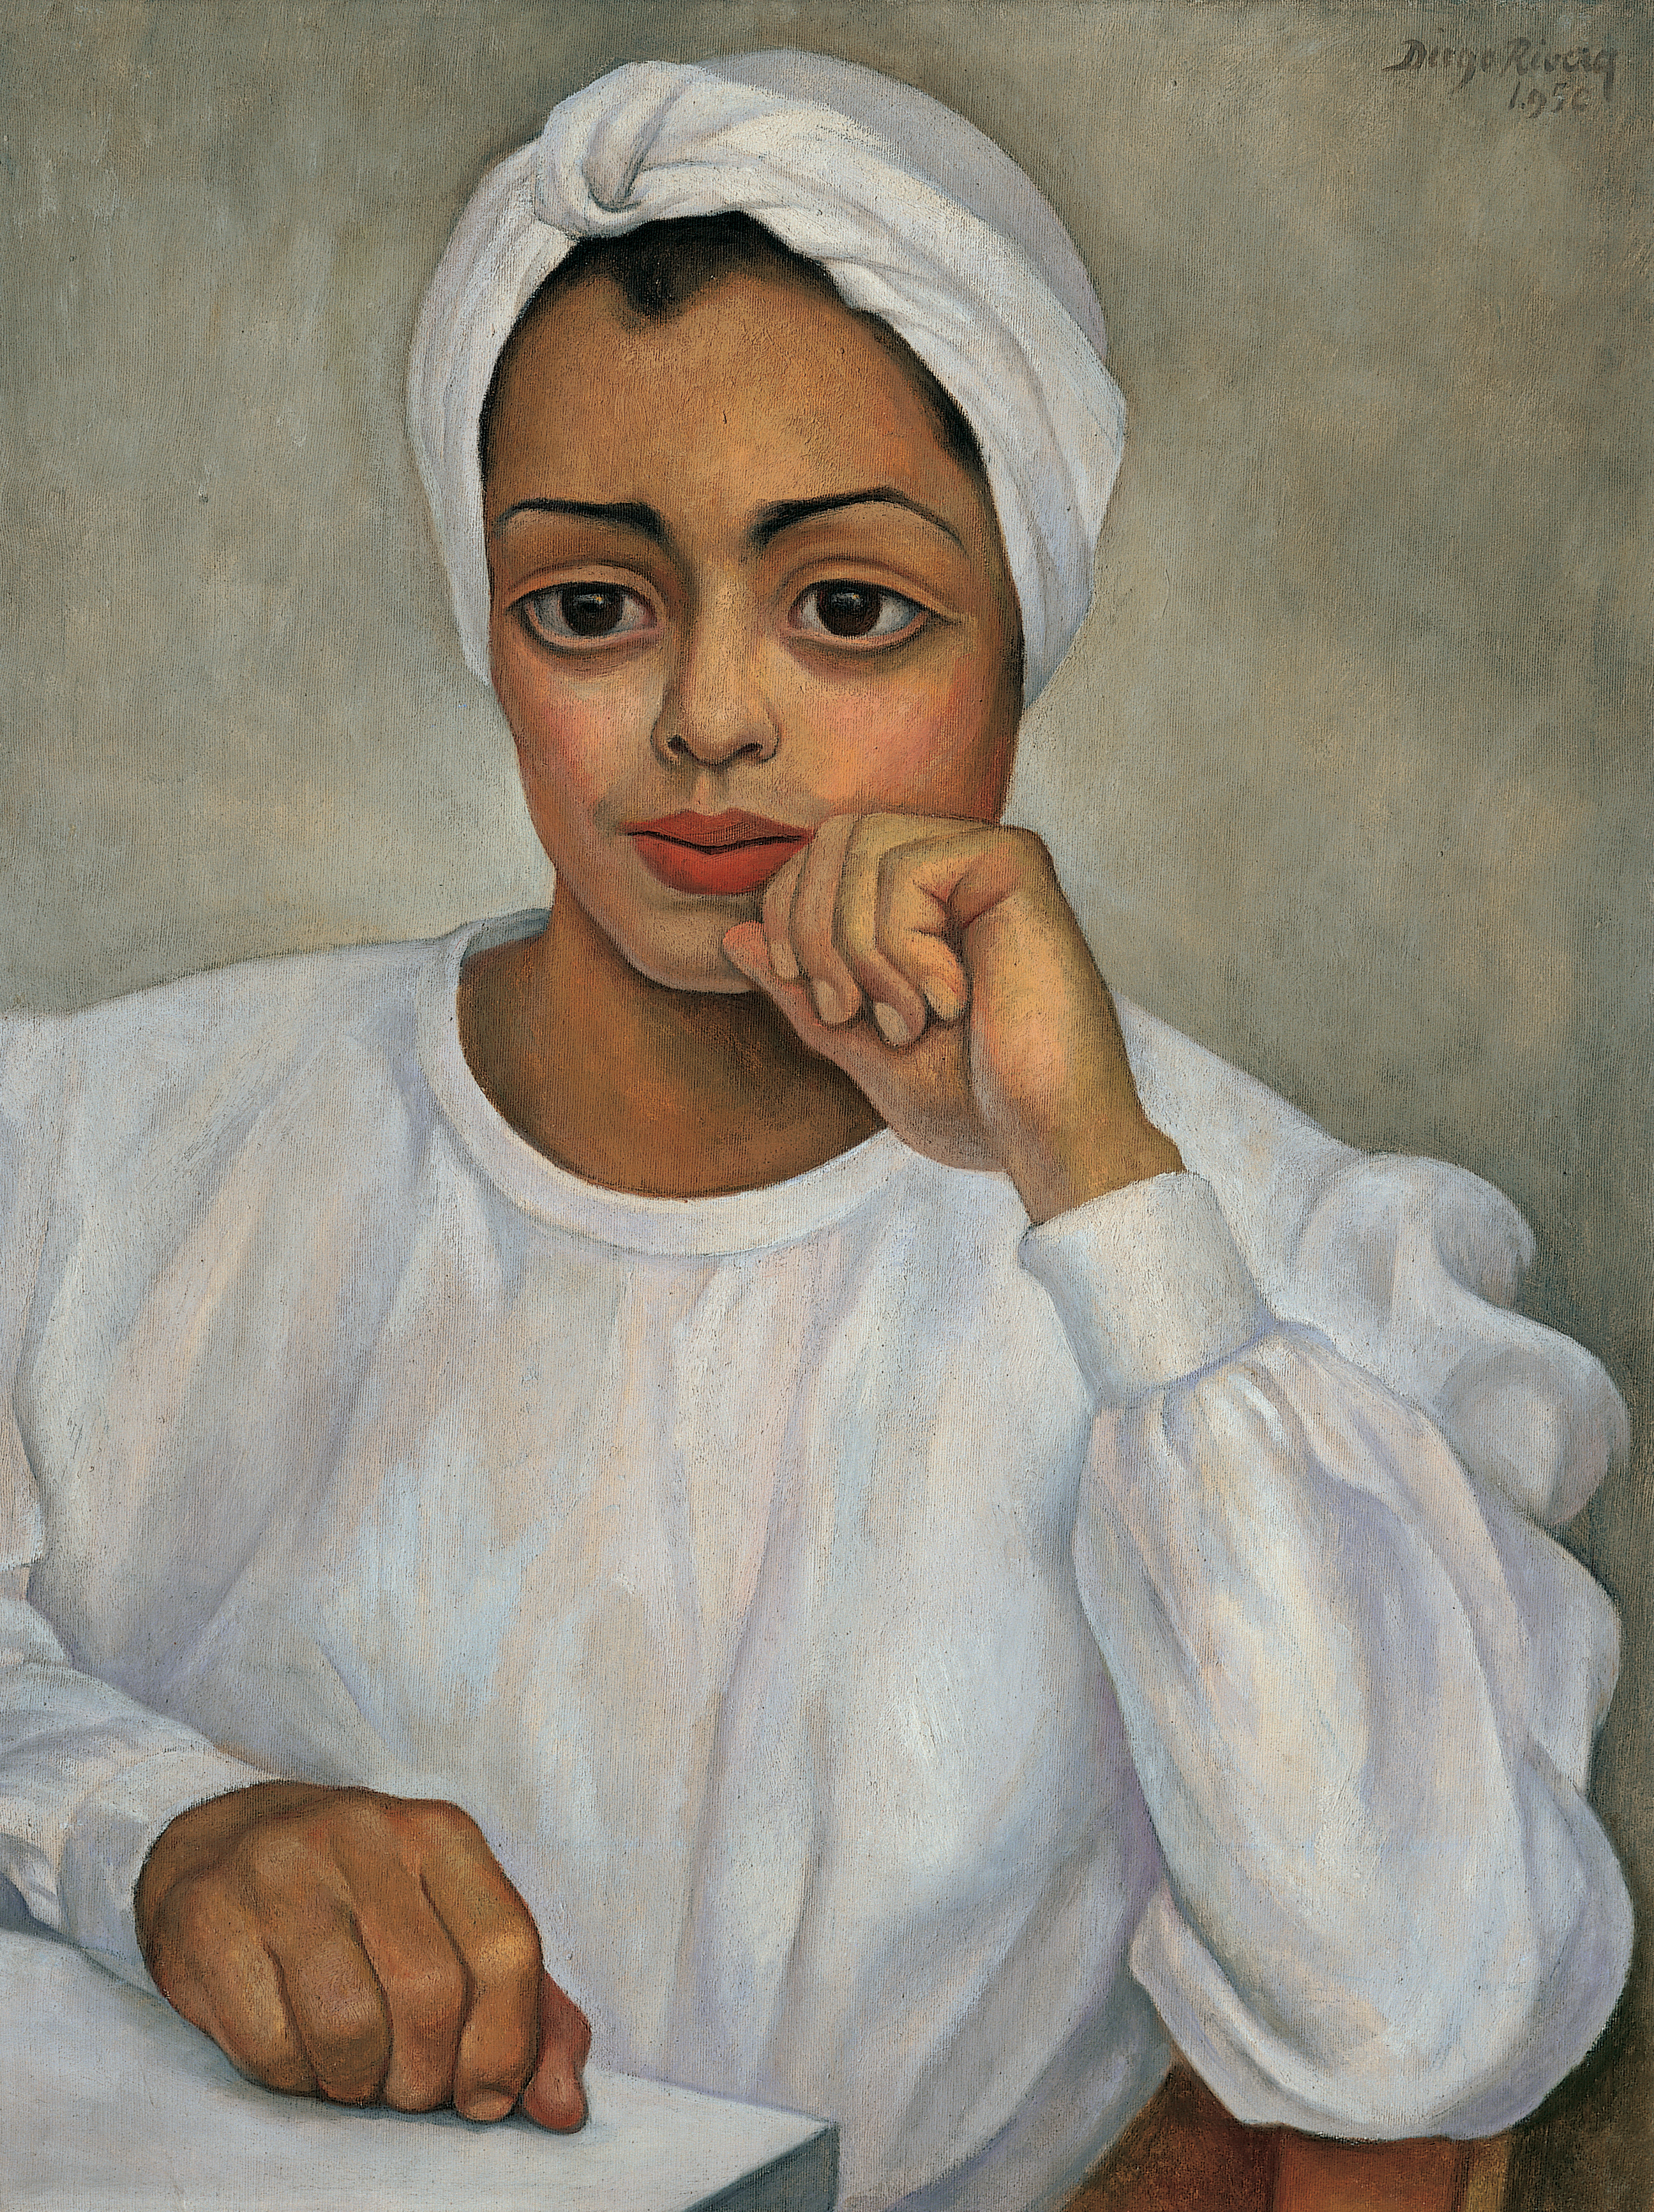 Meksikalı Doktor (Irma Mendoza'nın Portresi) (orig. "Mexican Doctor (Portrait of Irma Mendoza)") by Diego Rivera - 1950 - 71 x 50 cm 